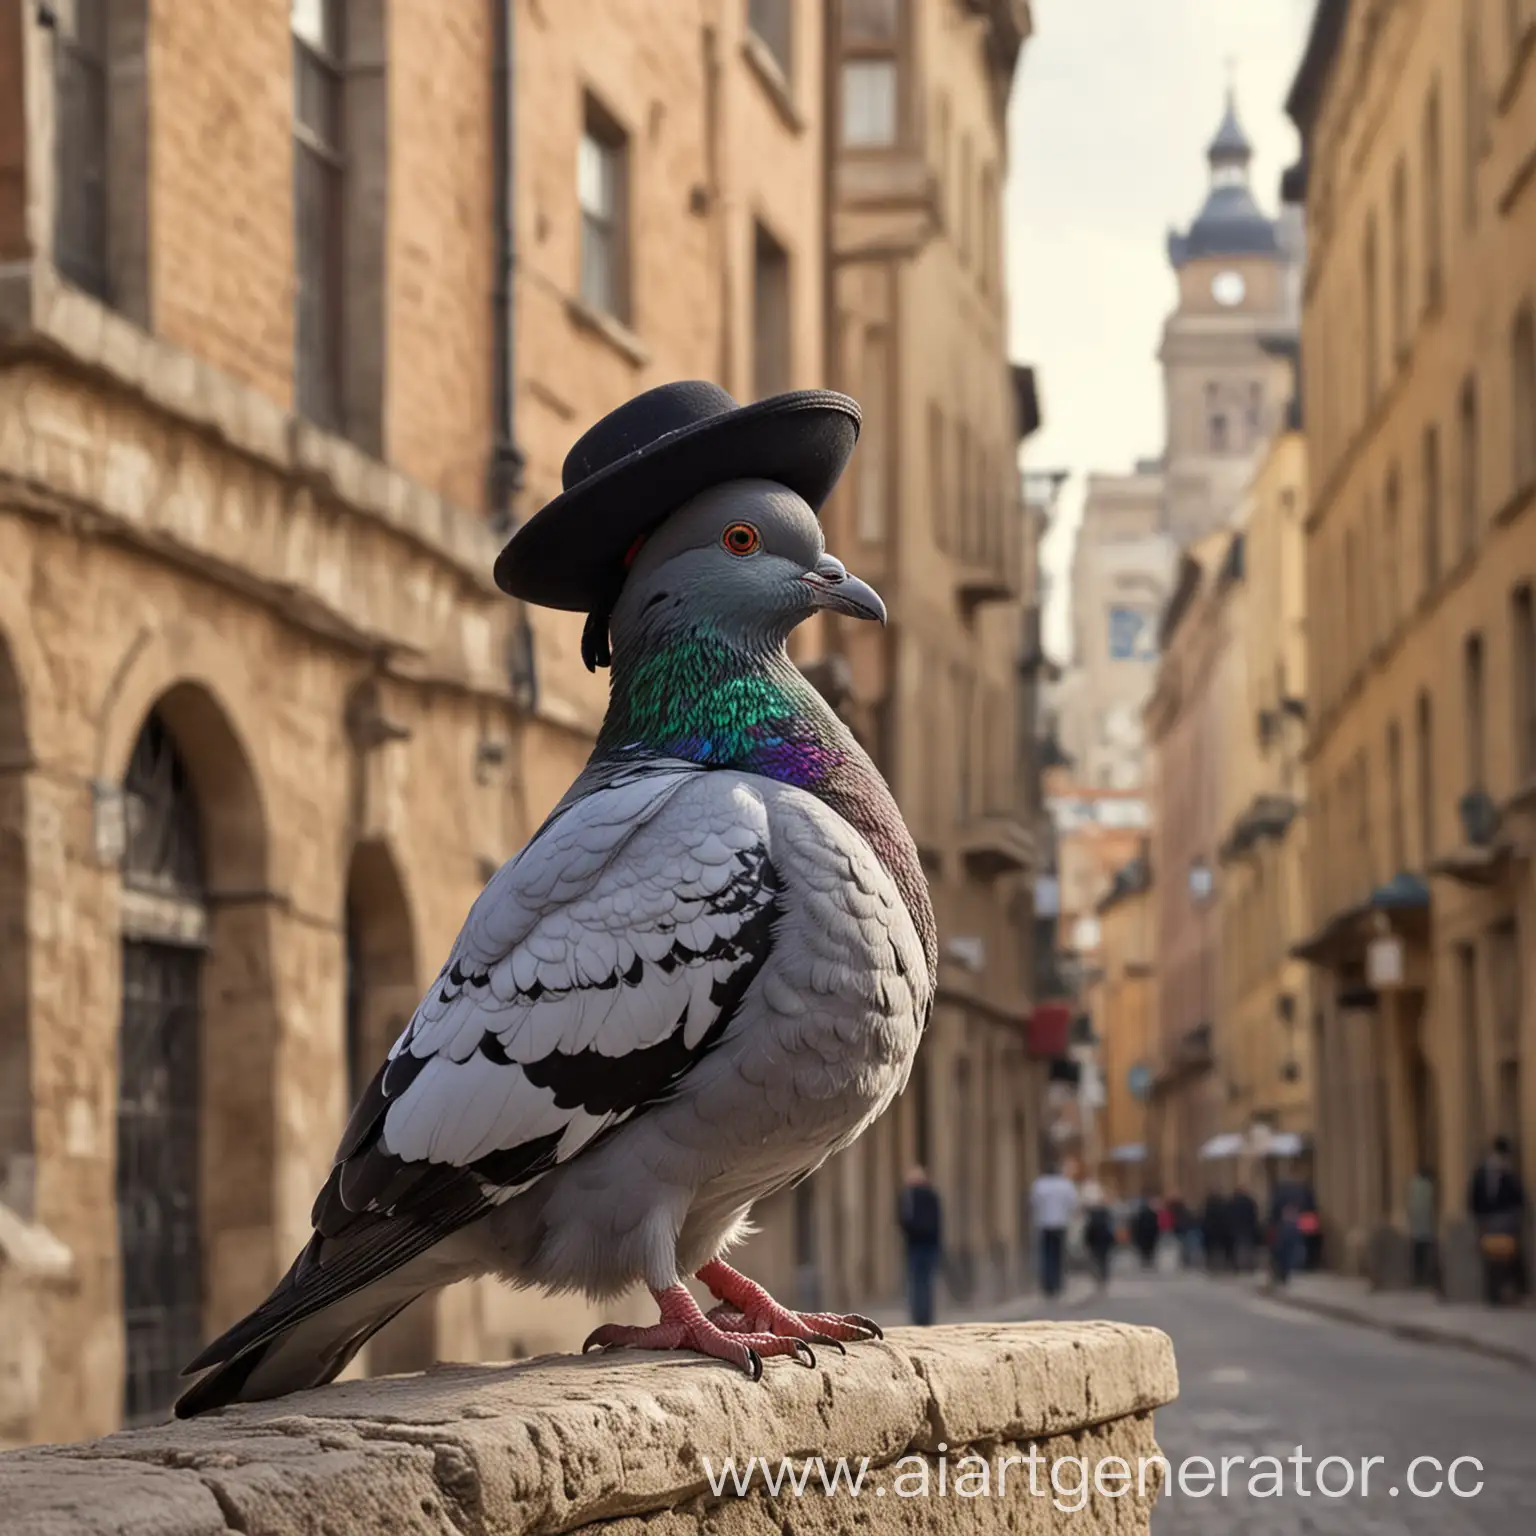 Urban-Bird-Pigeon-Wearing-Rabbis-Hat-in-City-Setting